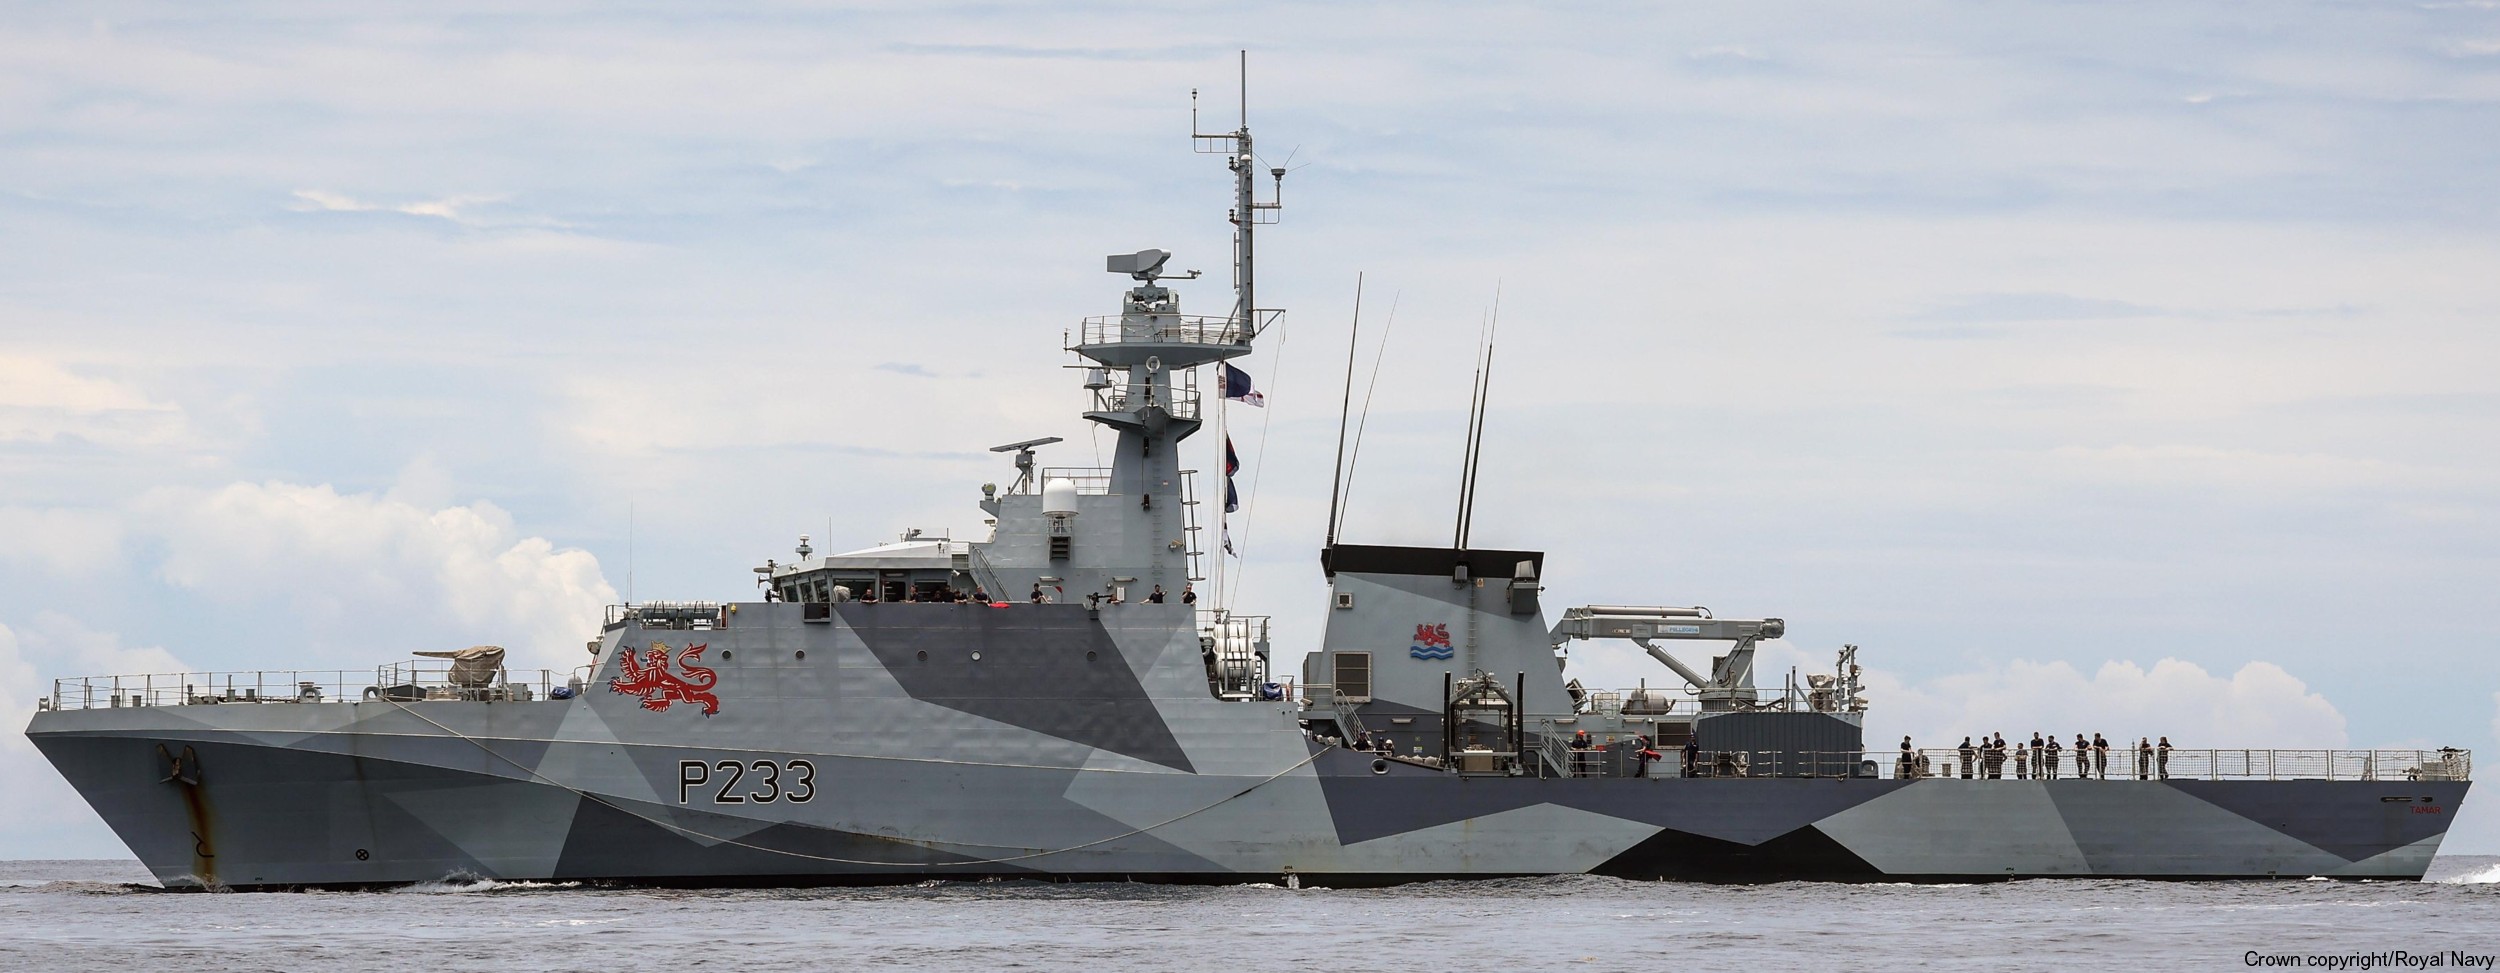 p233 hms tamar river class offshore patrol vessel opv royal navy 56 dazzle camouflage